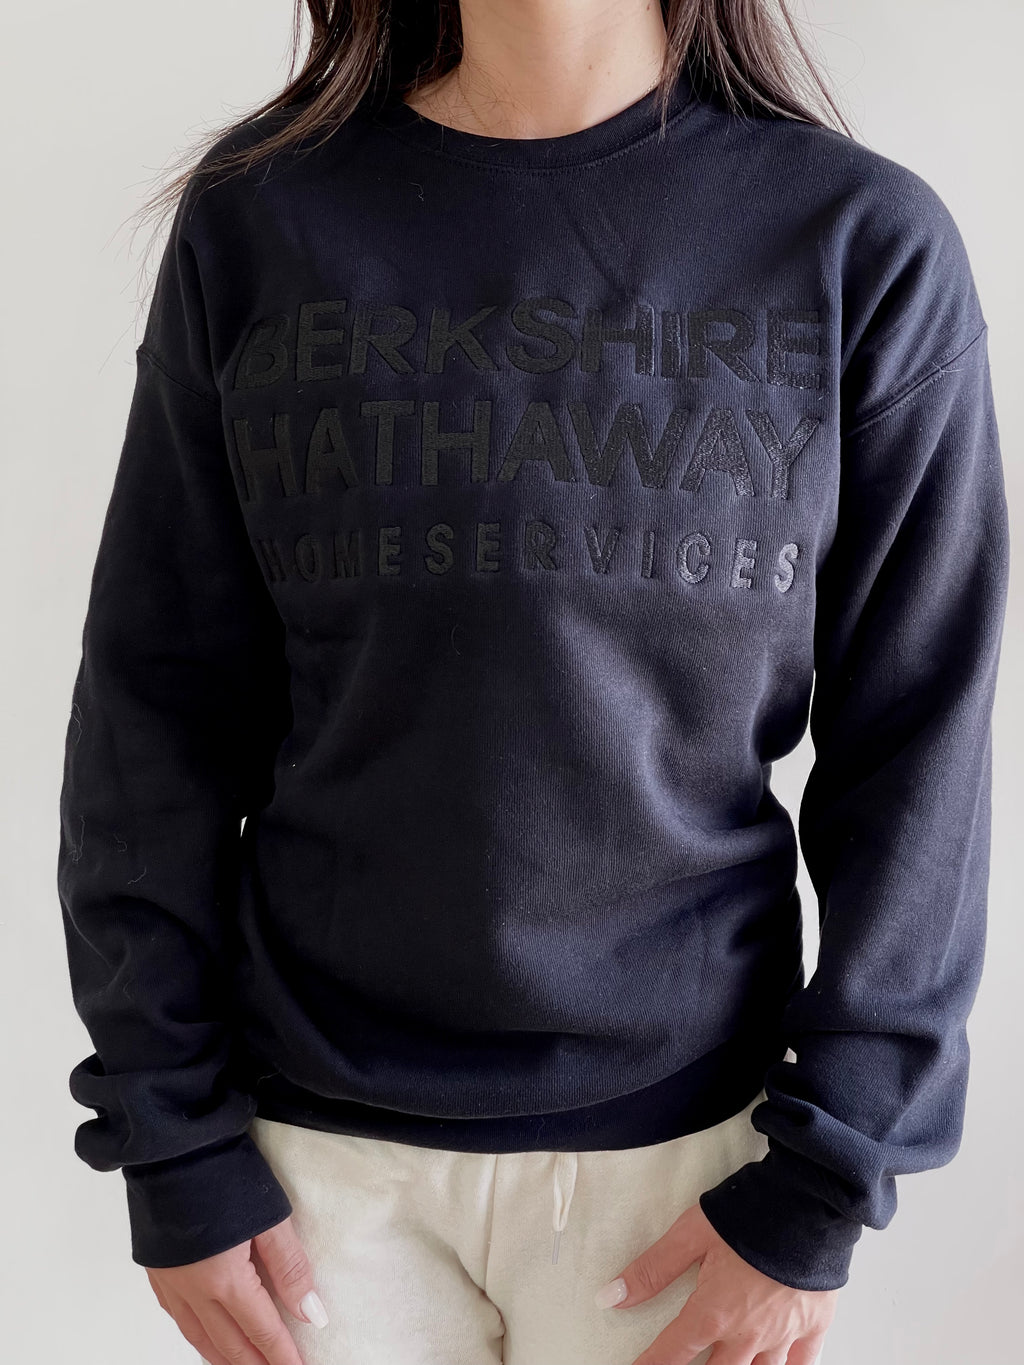 Men & Women's Fleece Berkshire Hathaway HomeServices Embroidered Sweater